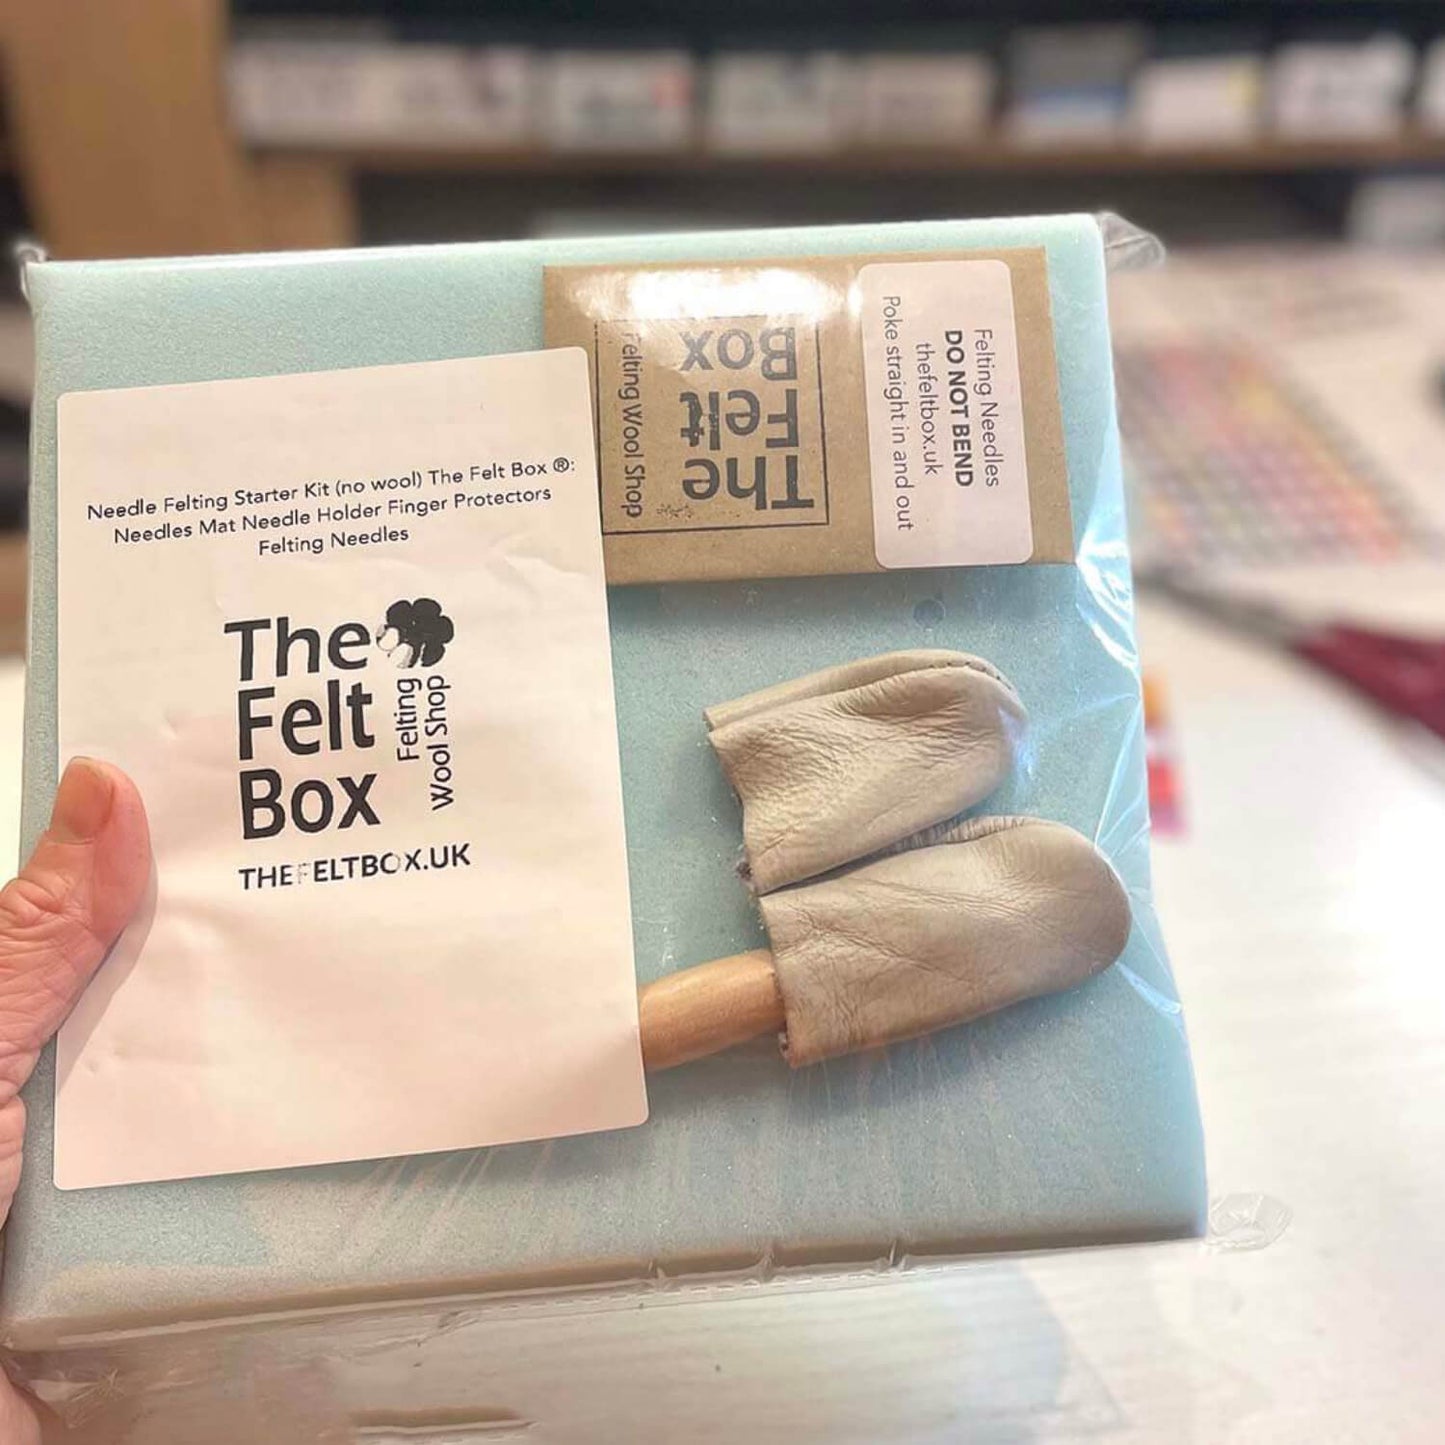 Needle Felting Starter Kit (no wool) The Felt Box ®: Mat Needle Holder Finger Protectors Felting Needles